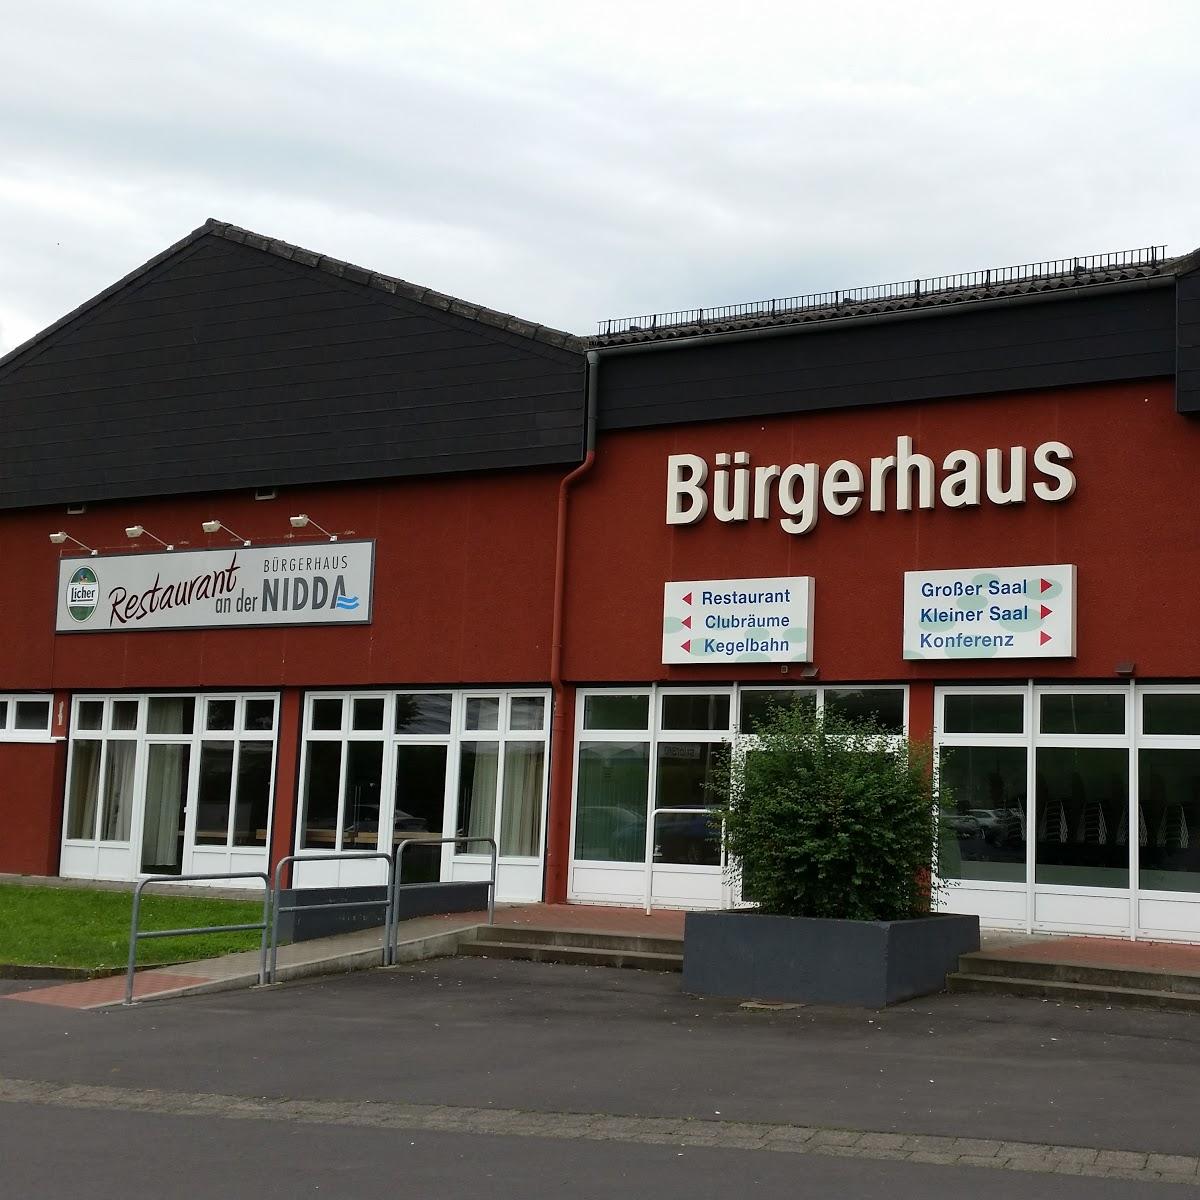 Restaurant "Bürgerhaus" in Nidda